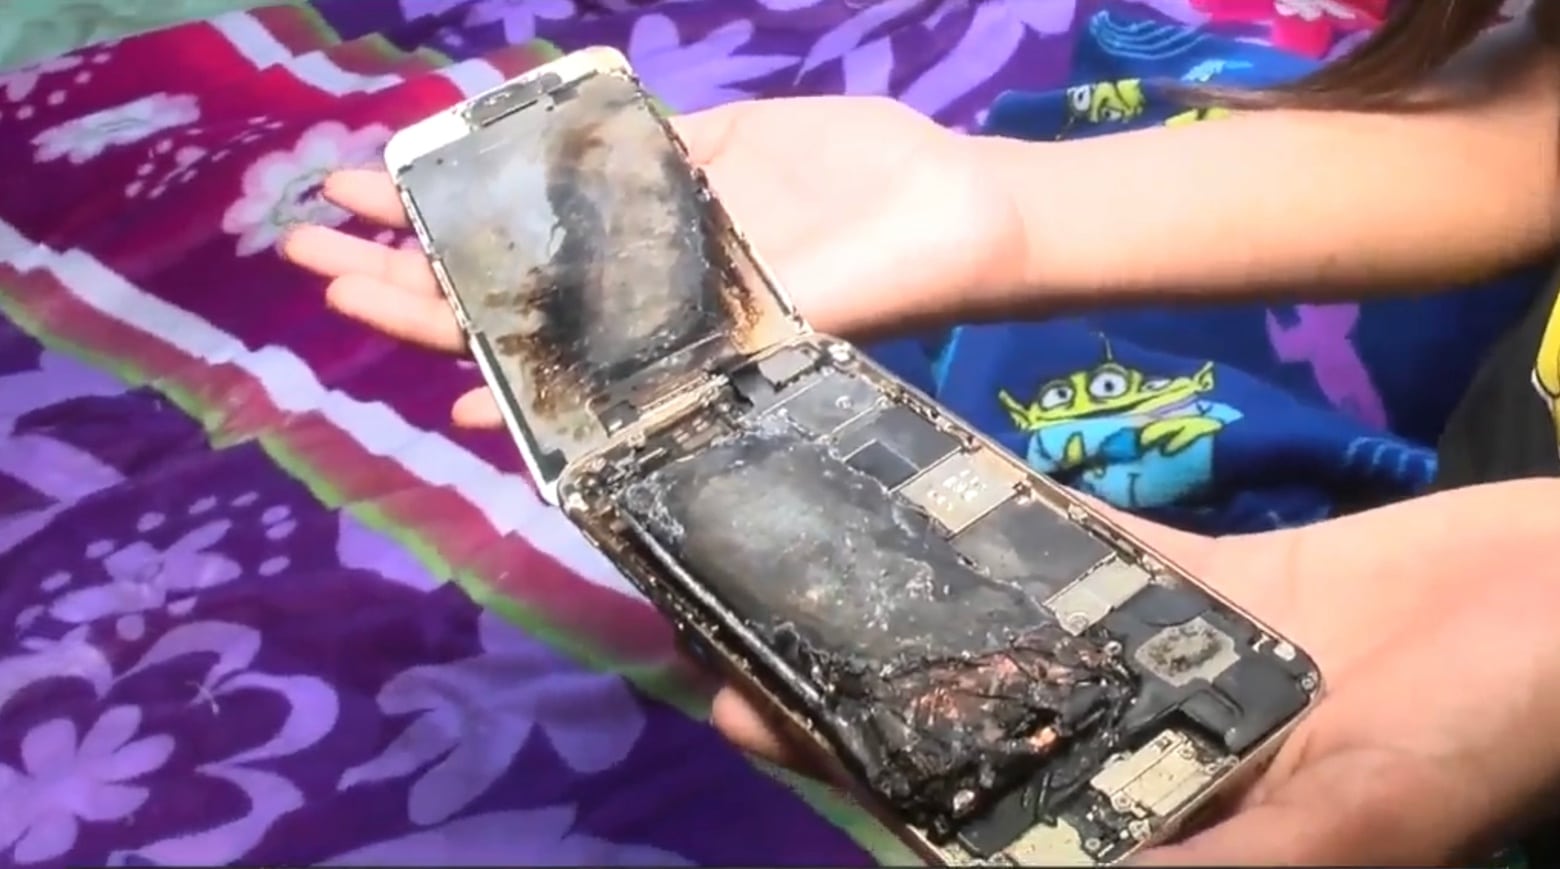 Burned iPhone 6